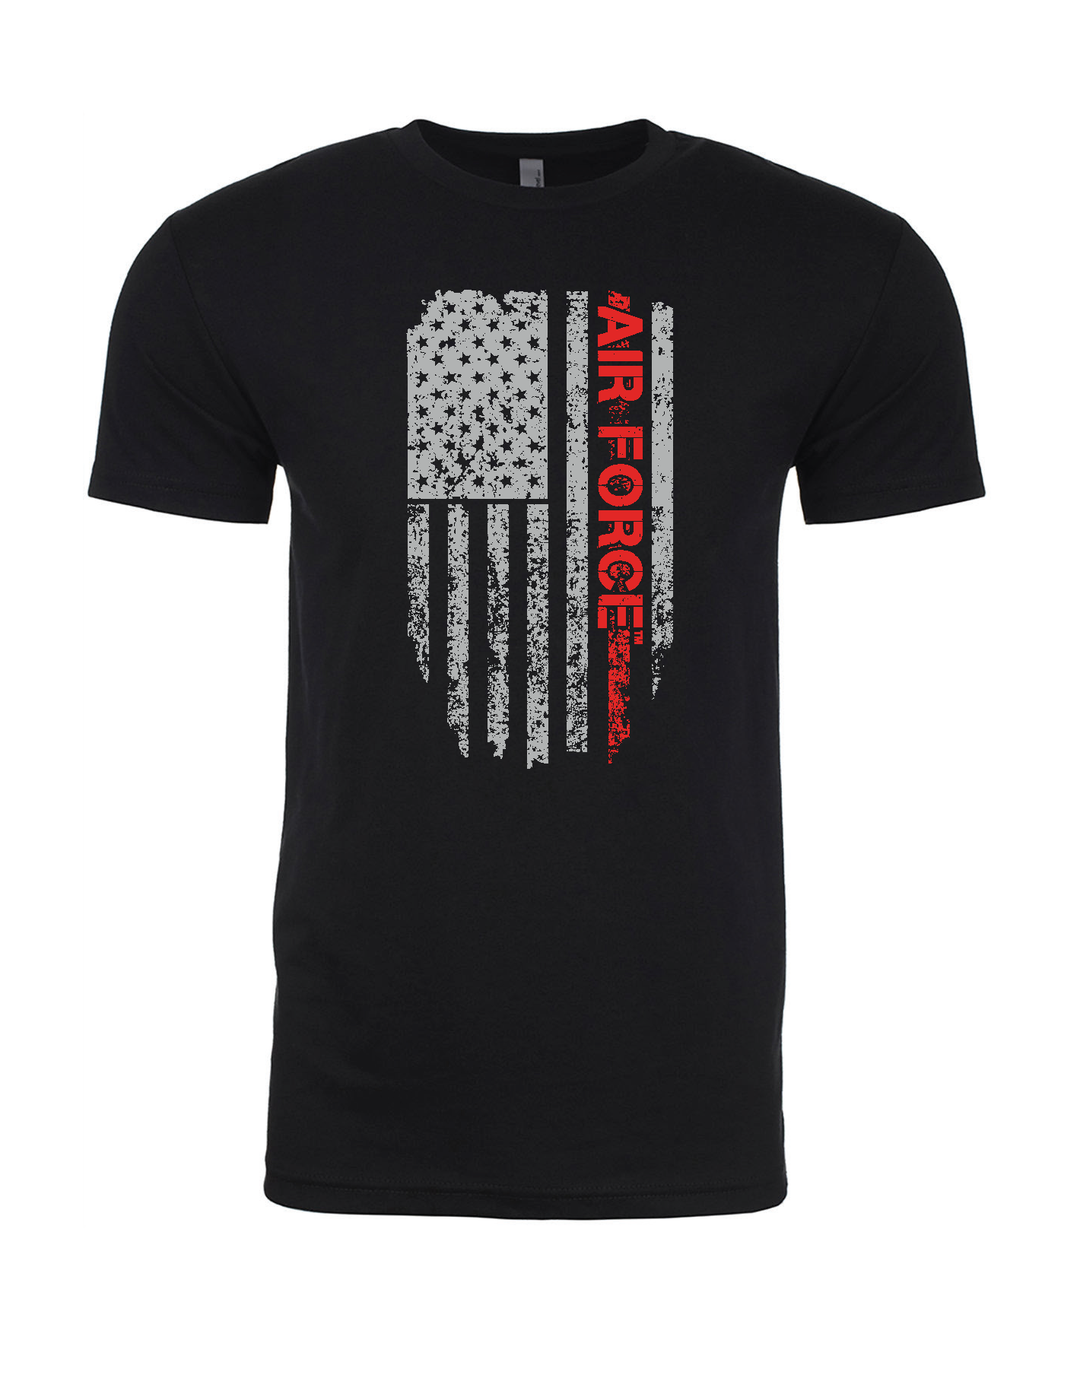 U.S. Air Force Next Level Flag T-Shirt (Black)